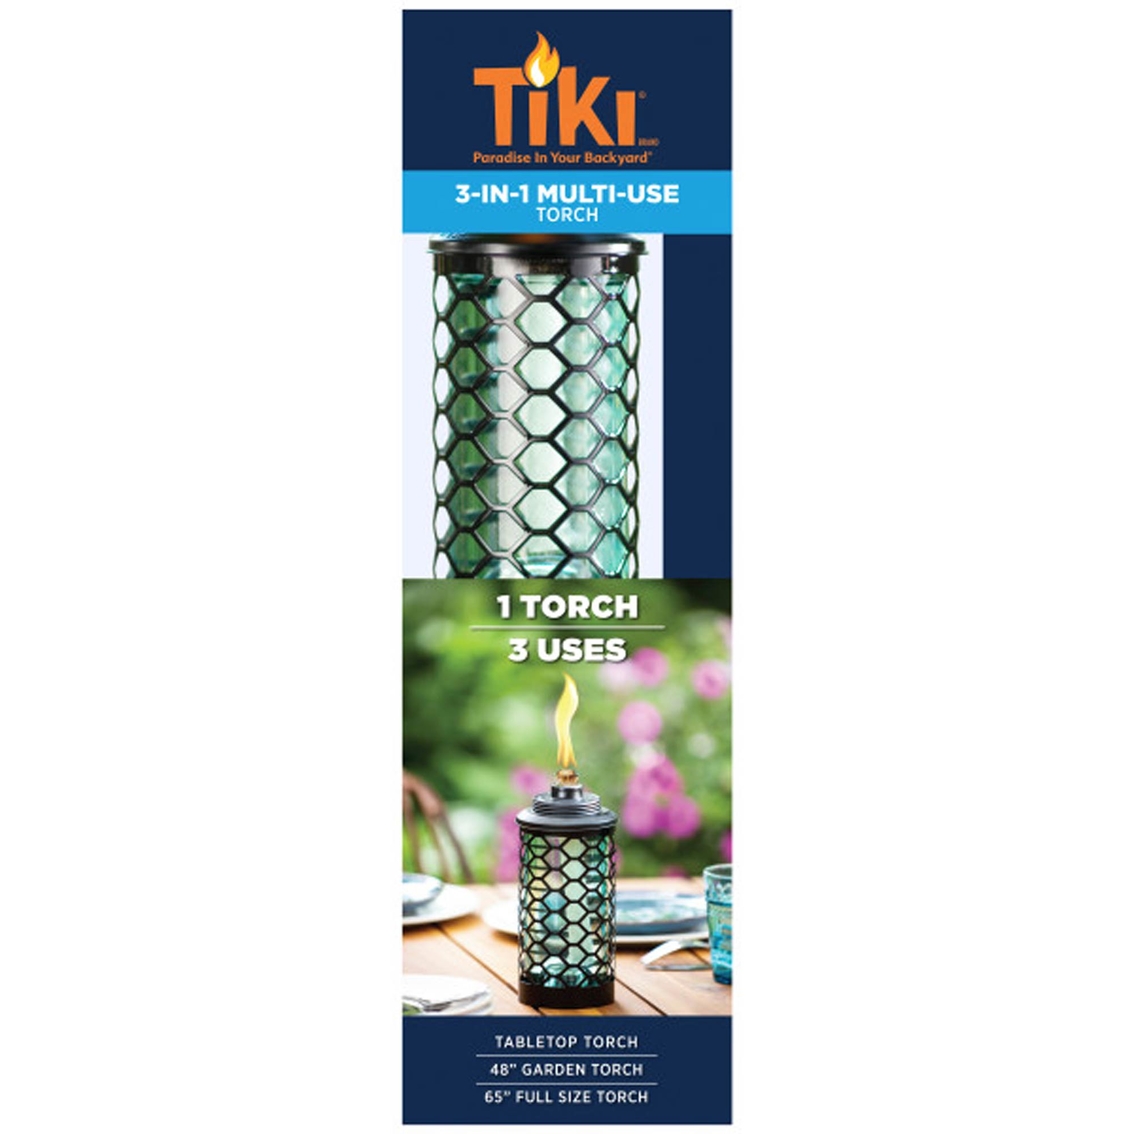 TIKI Honeycomb Glass Torch - Image 2 of 2